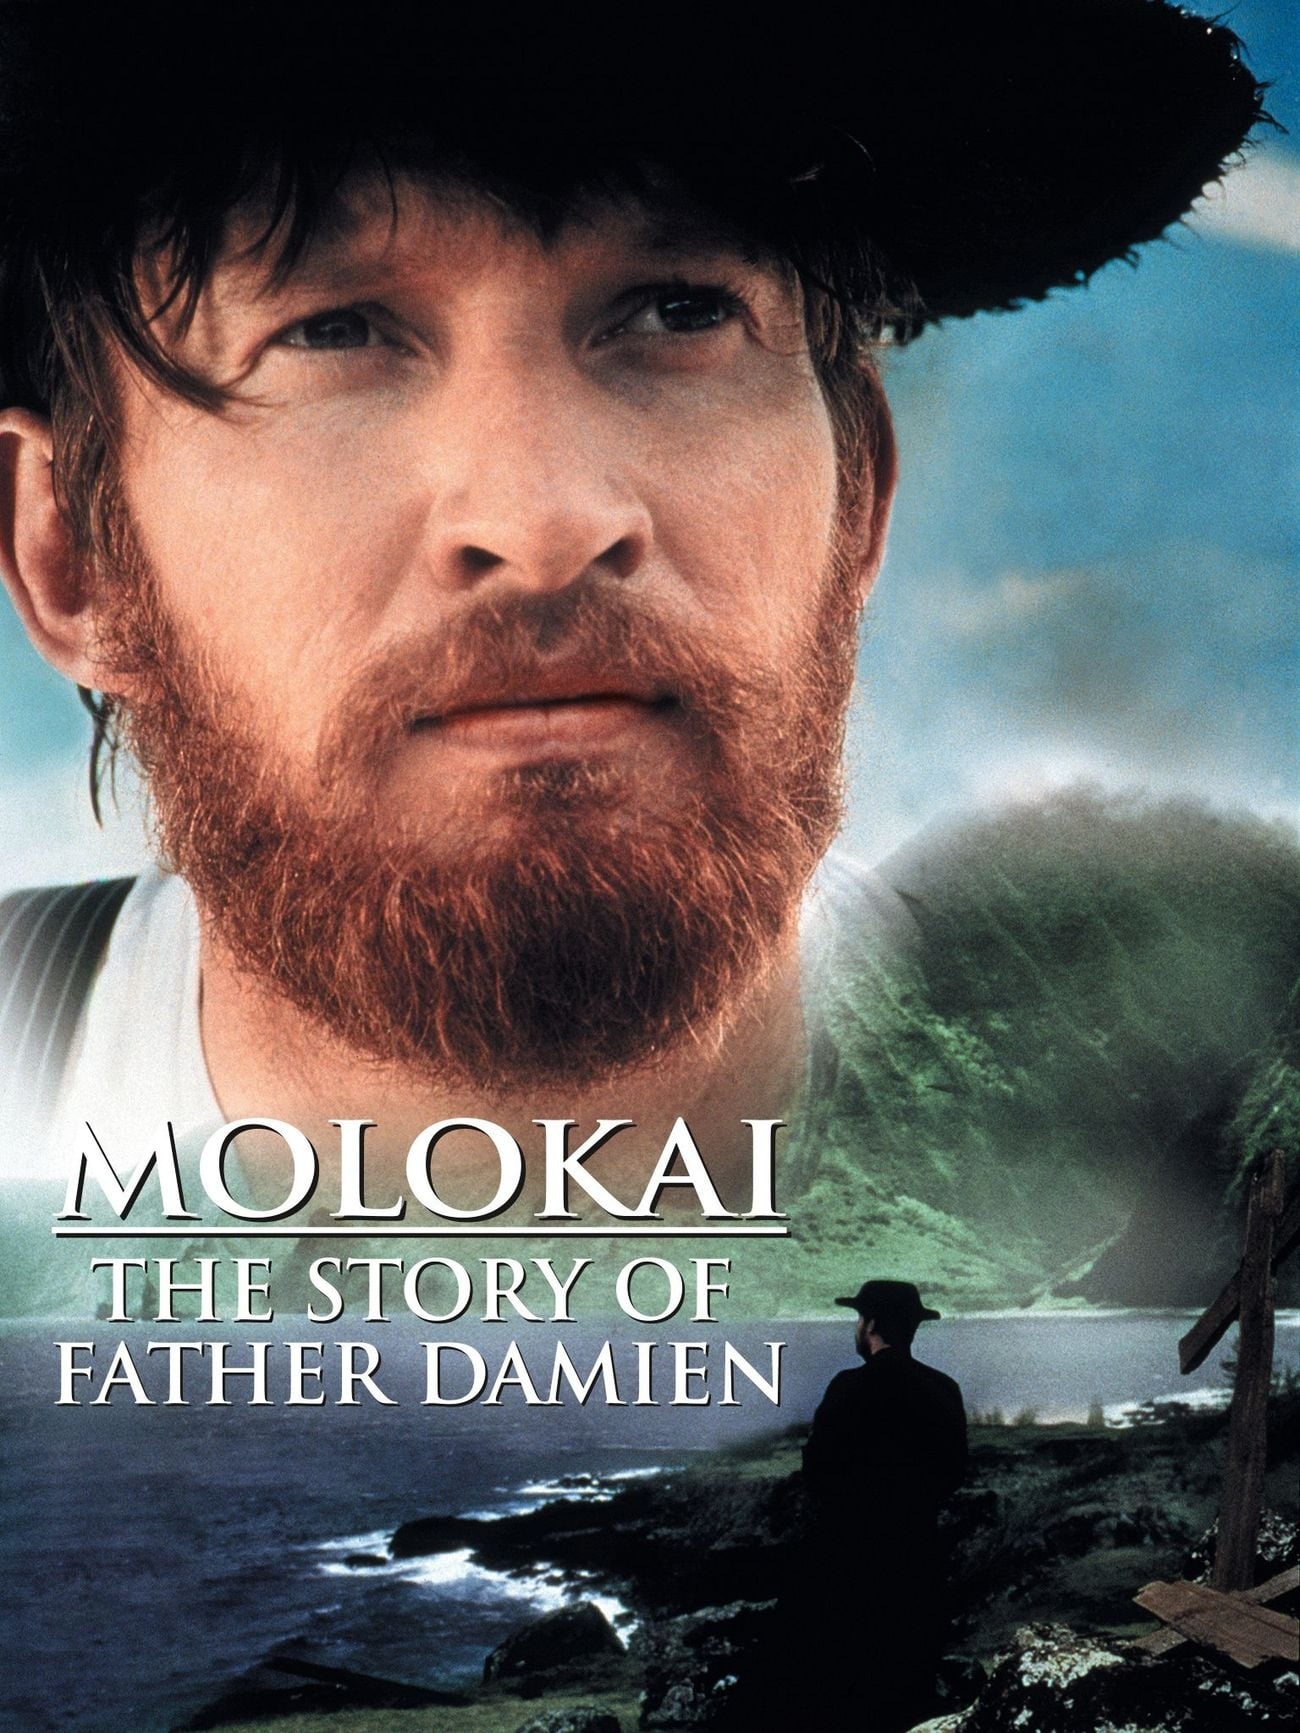 Plakat von "Molokai: The Story of Father Damien"